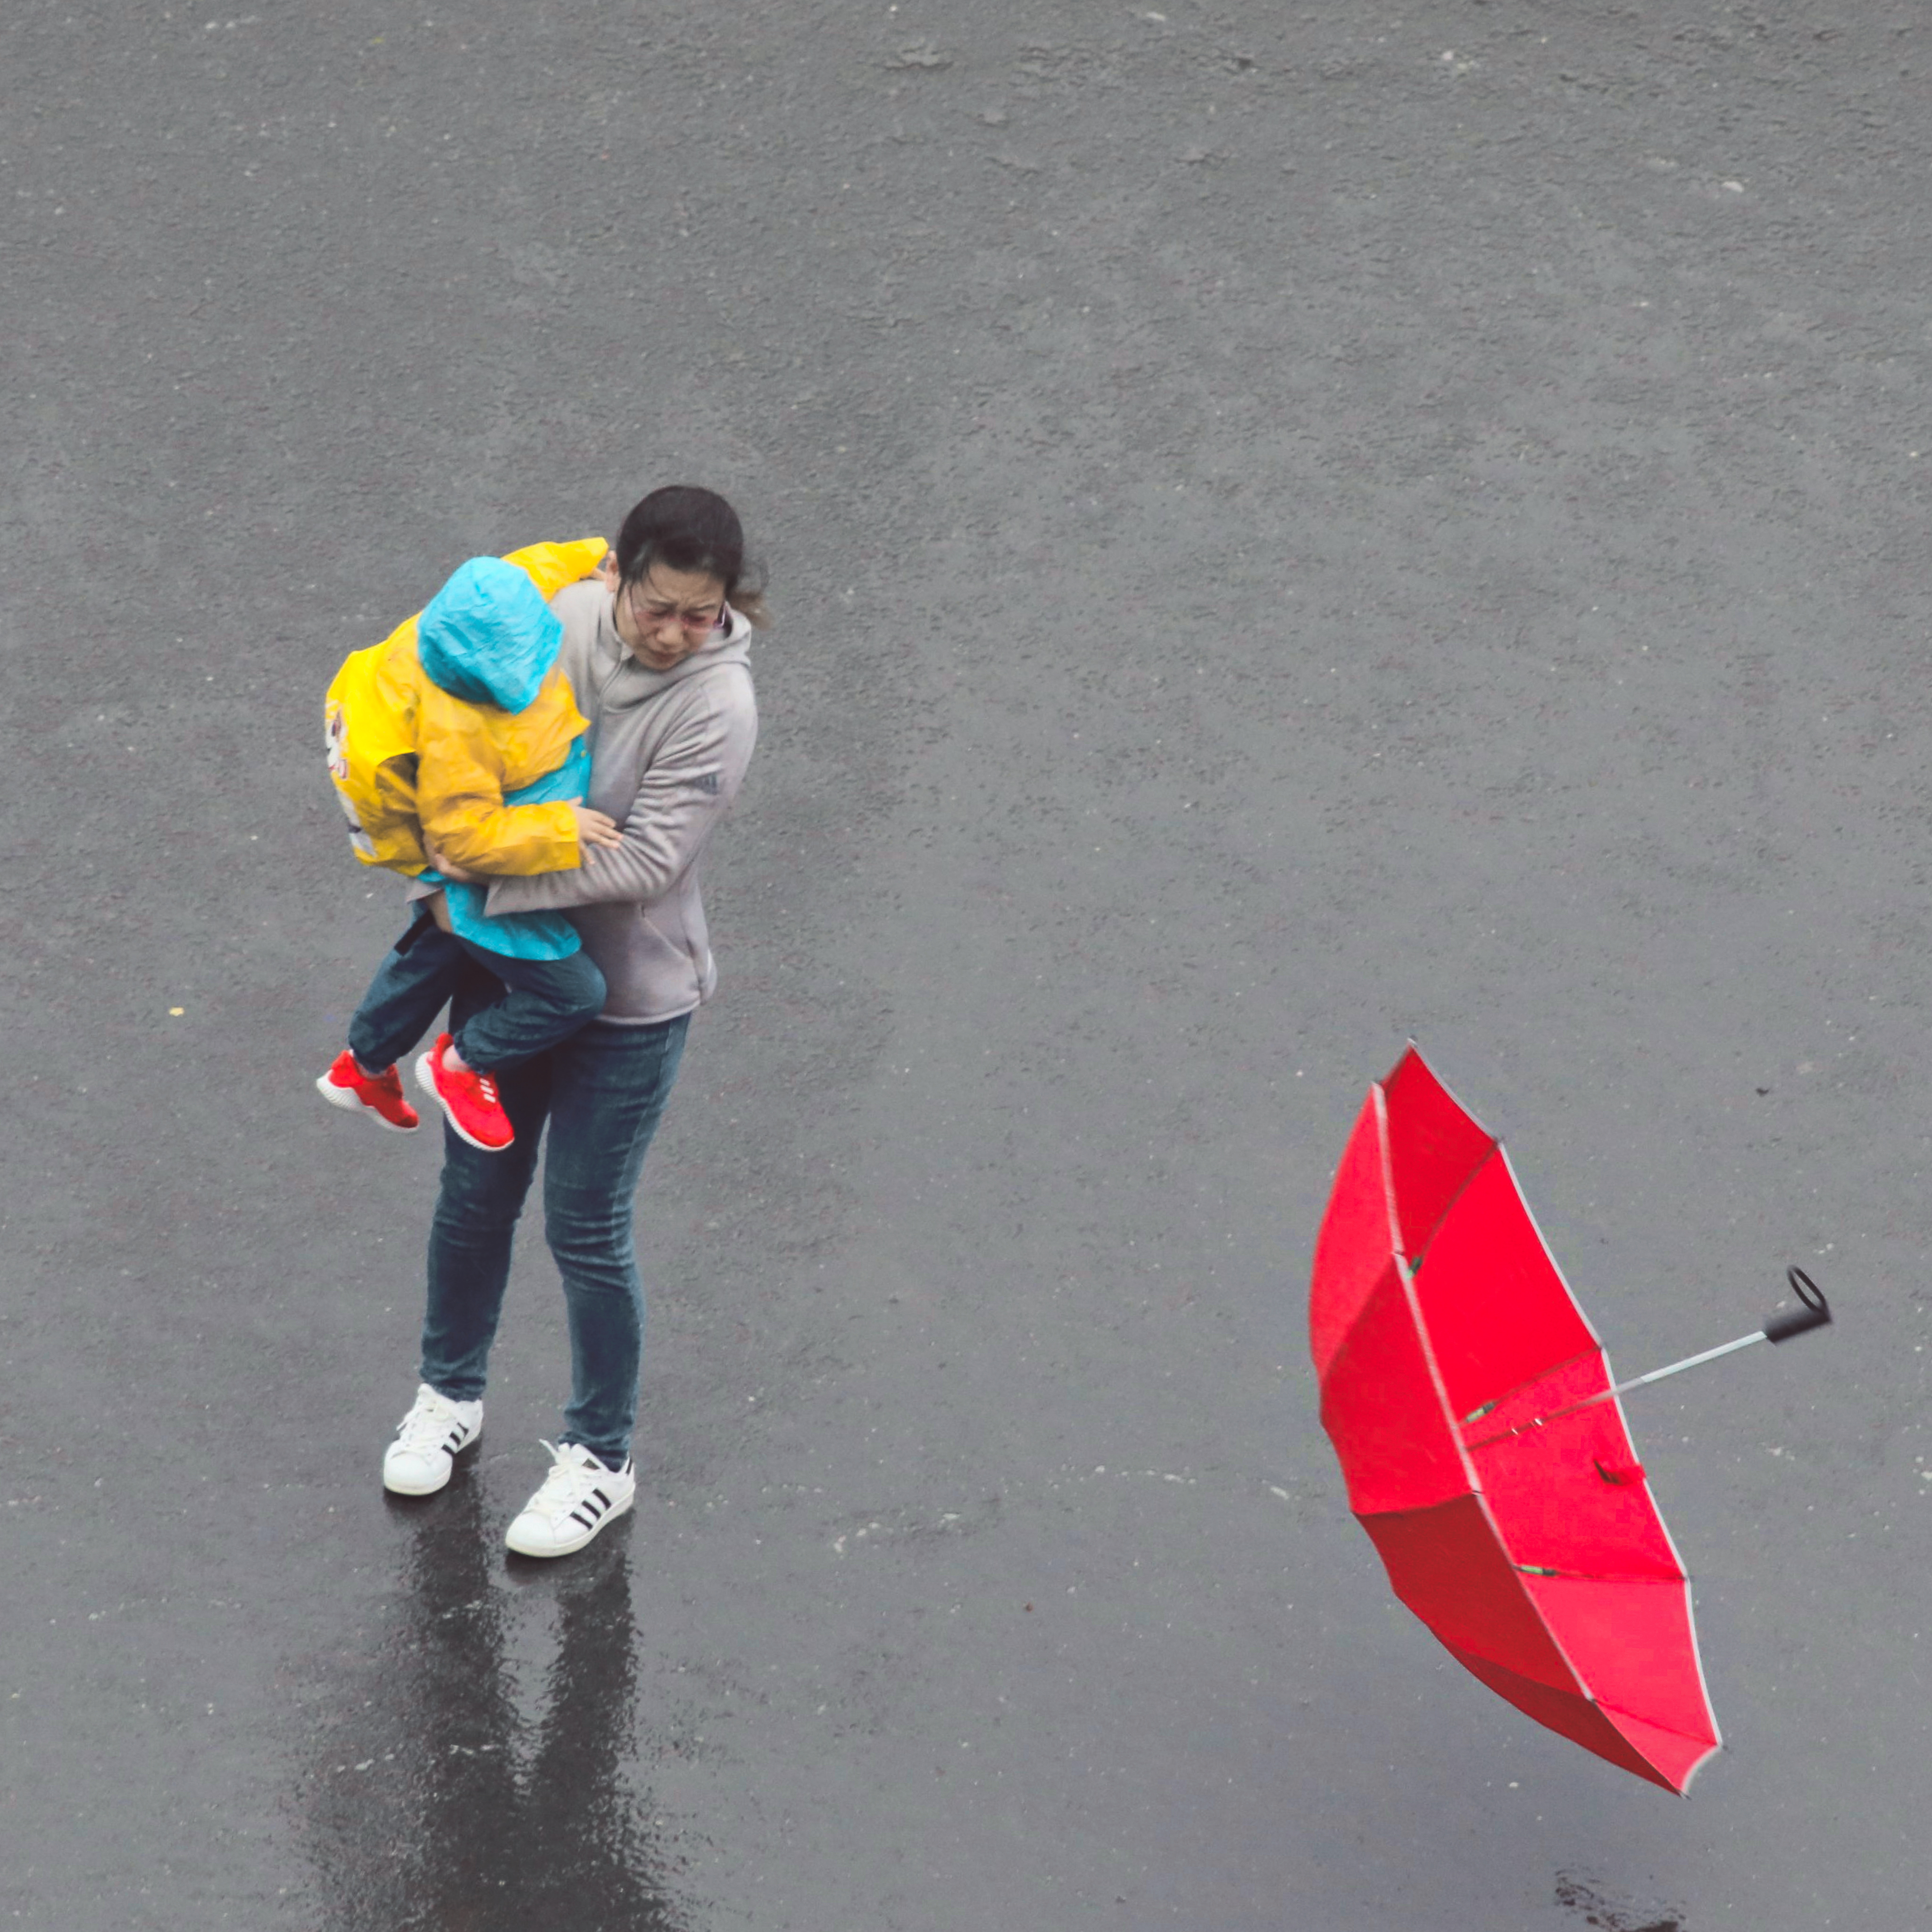 hk_c_王俊華-風雨中母親顧孩子、顧不了雨傘，雨傘被風吹走了.jpg